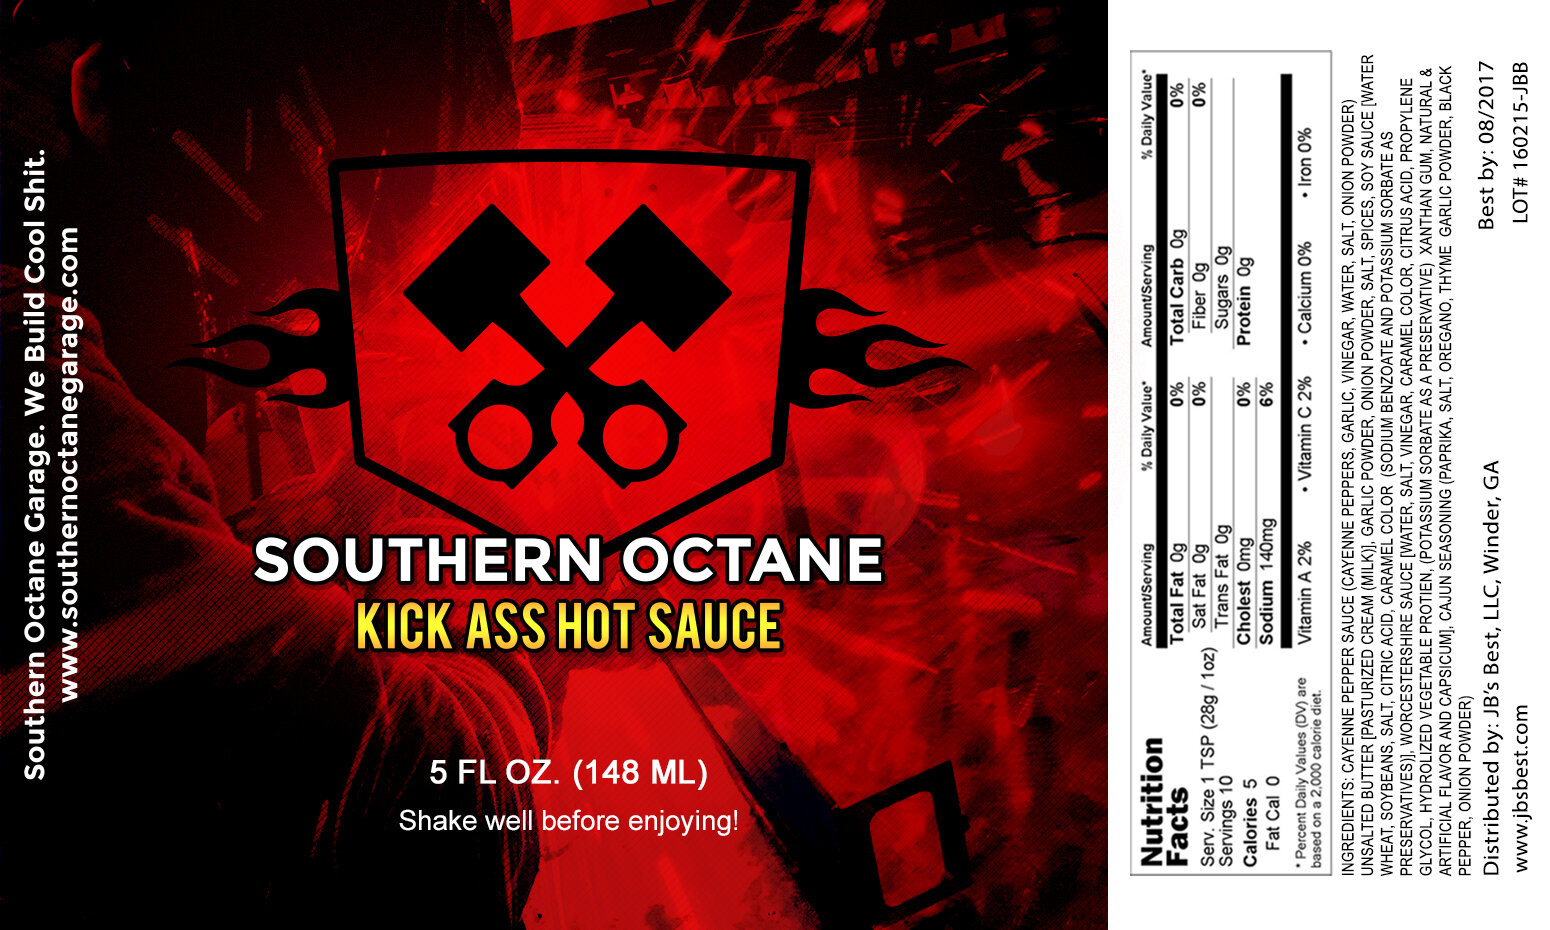 Southern-Octane-Template-2-3x5_1.jpg